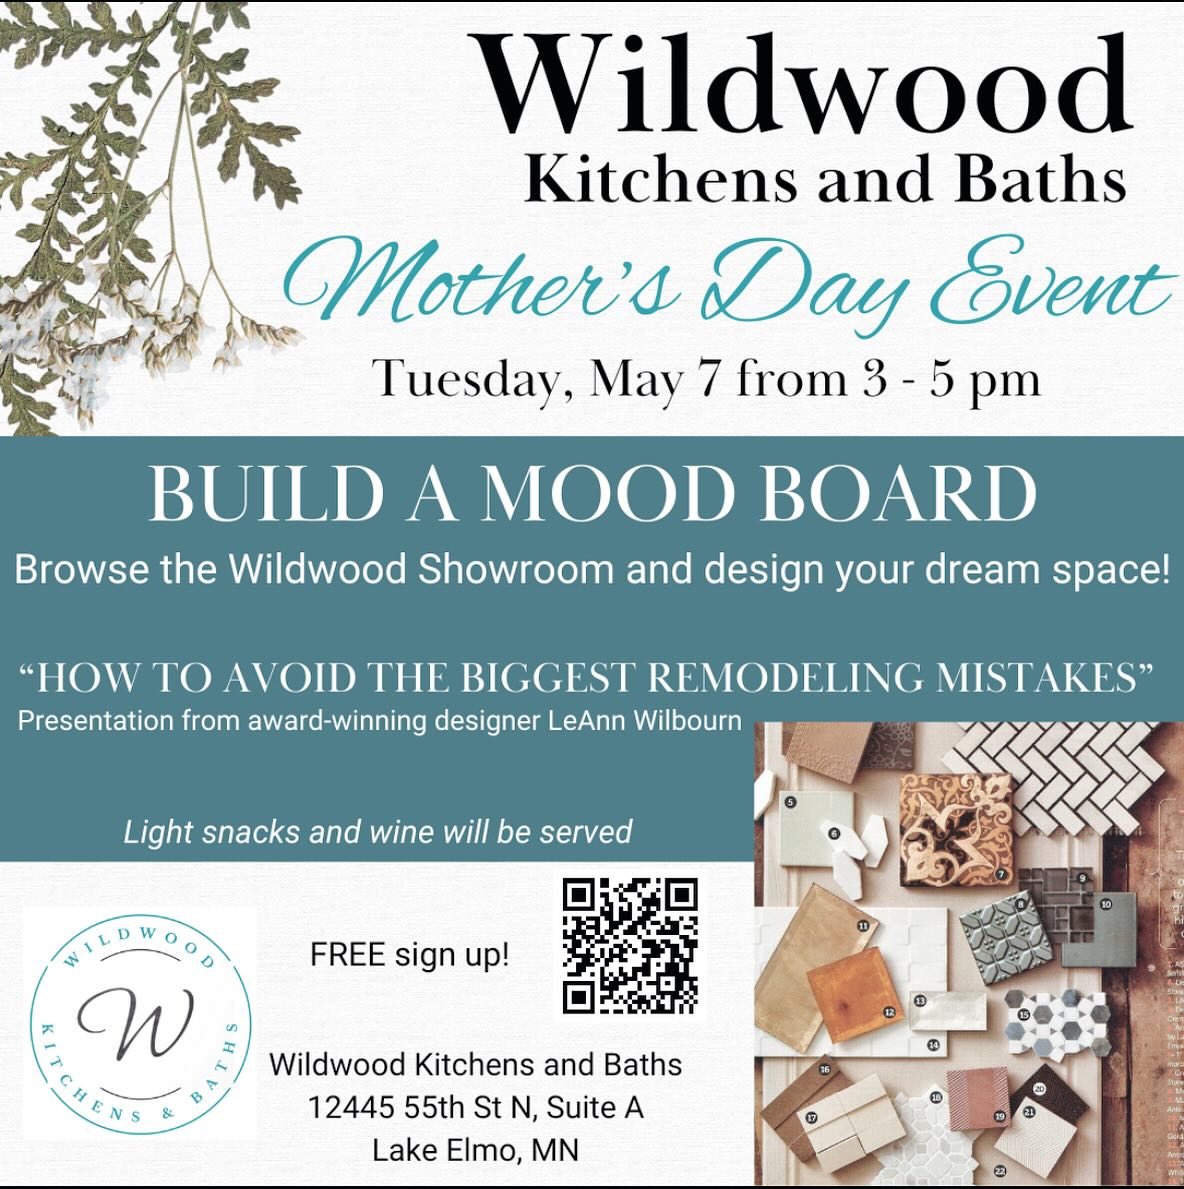 Wildwood Kitchens and Baths, Inc. 12445 55th St N Suite A, Lake Elmo Minnesota 55042